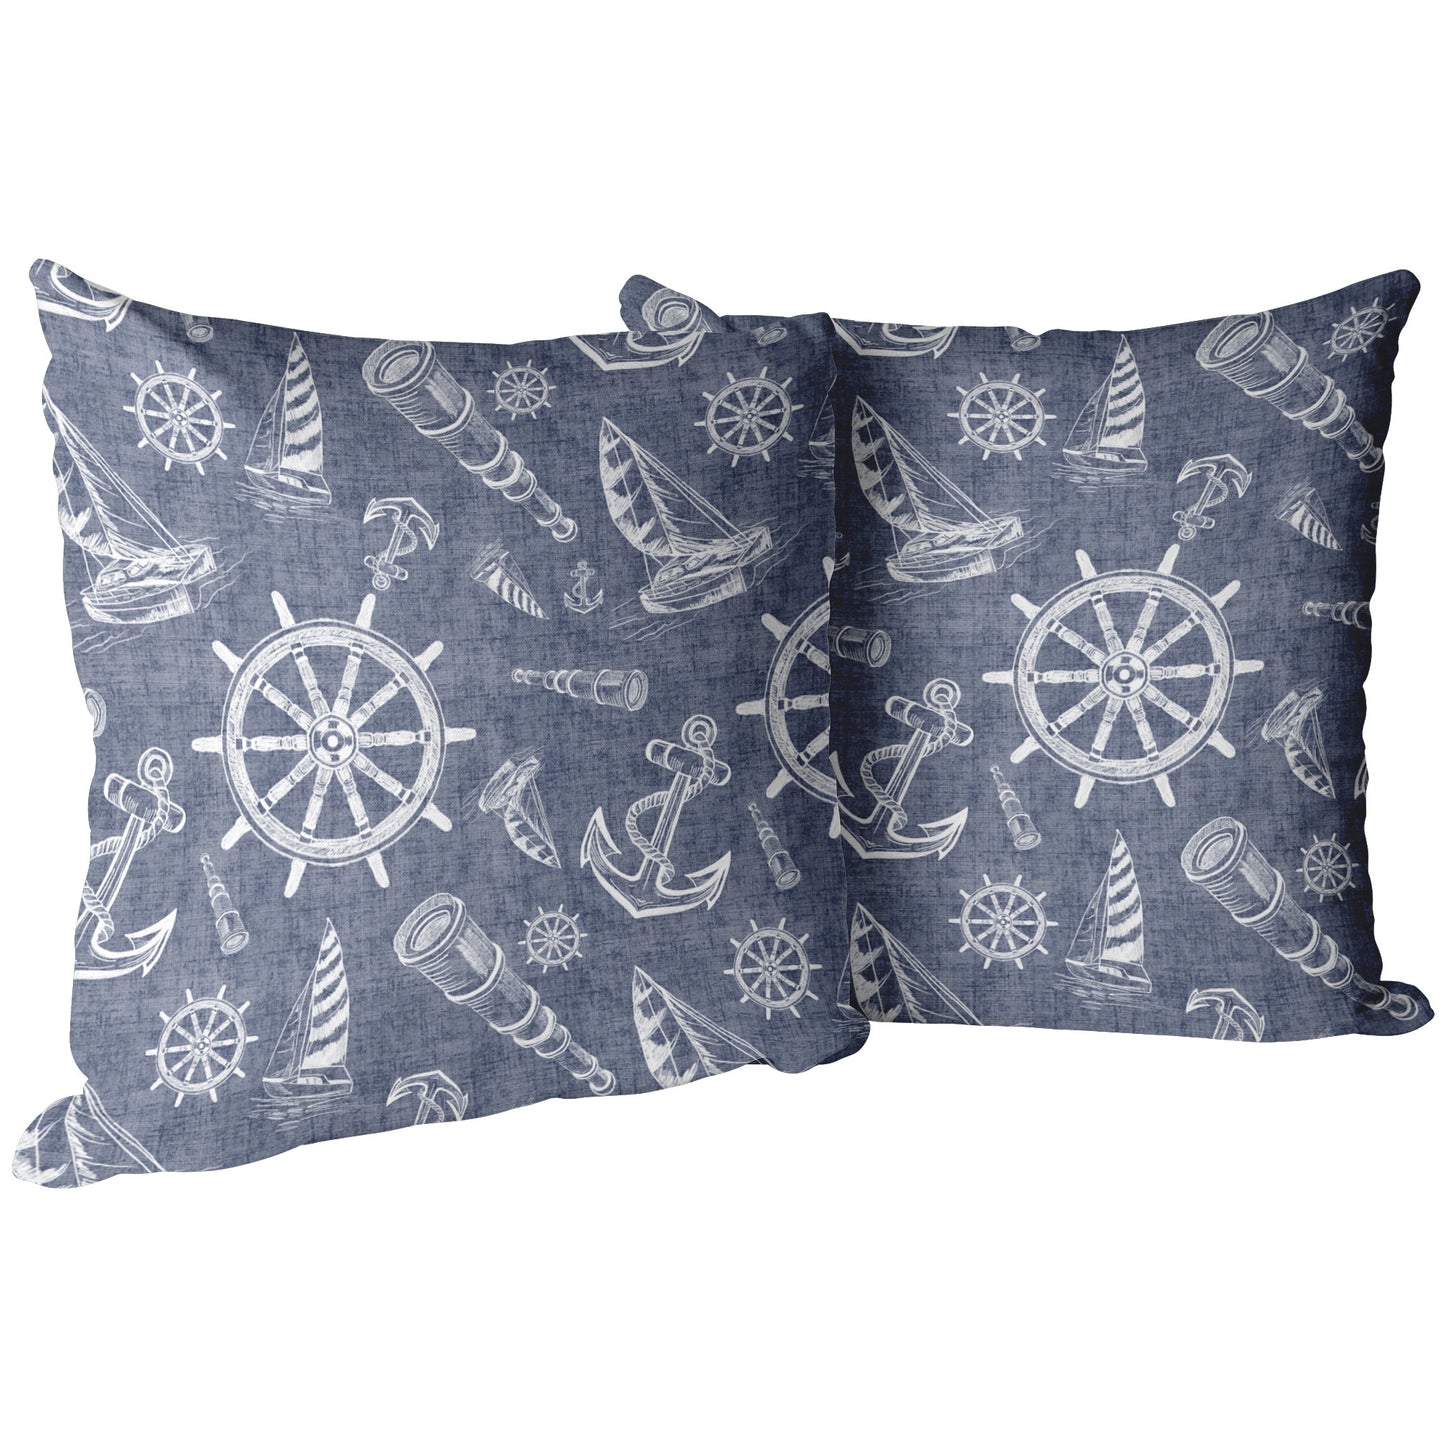 Nautical Sketches Design on Navy Linen Textured Background, Throw Pillow